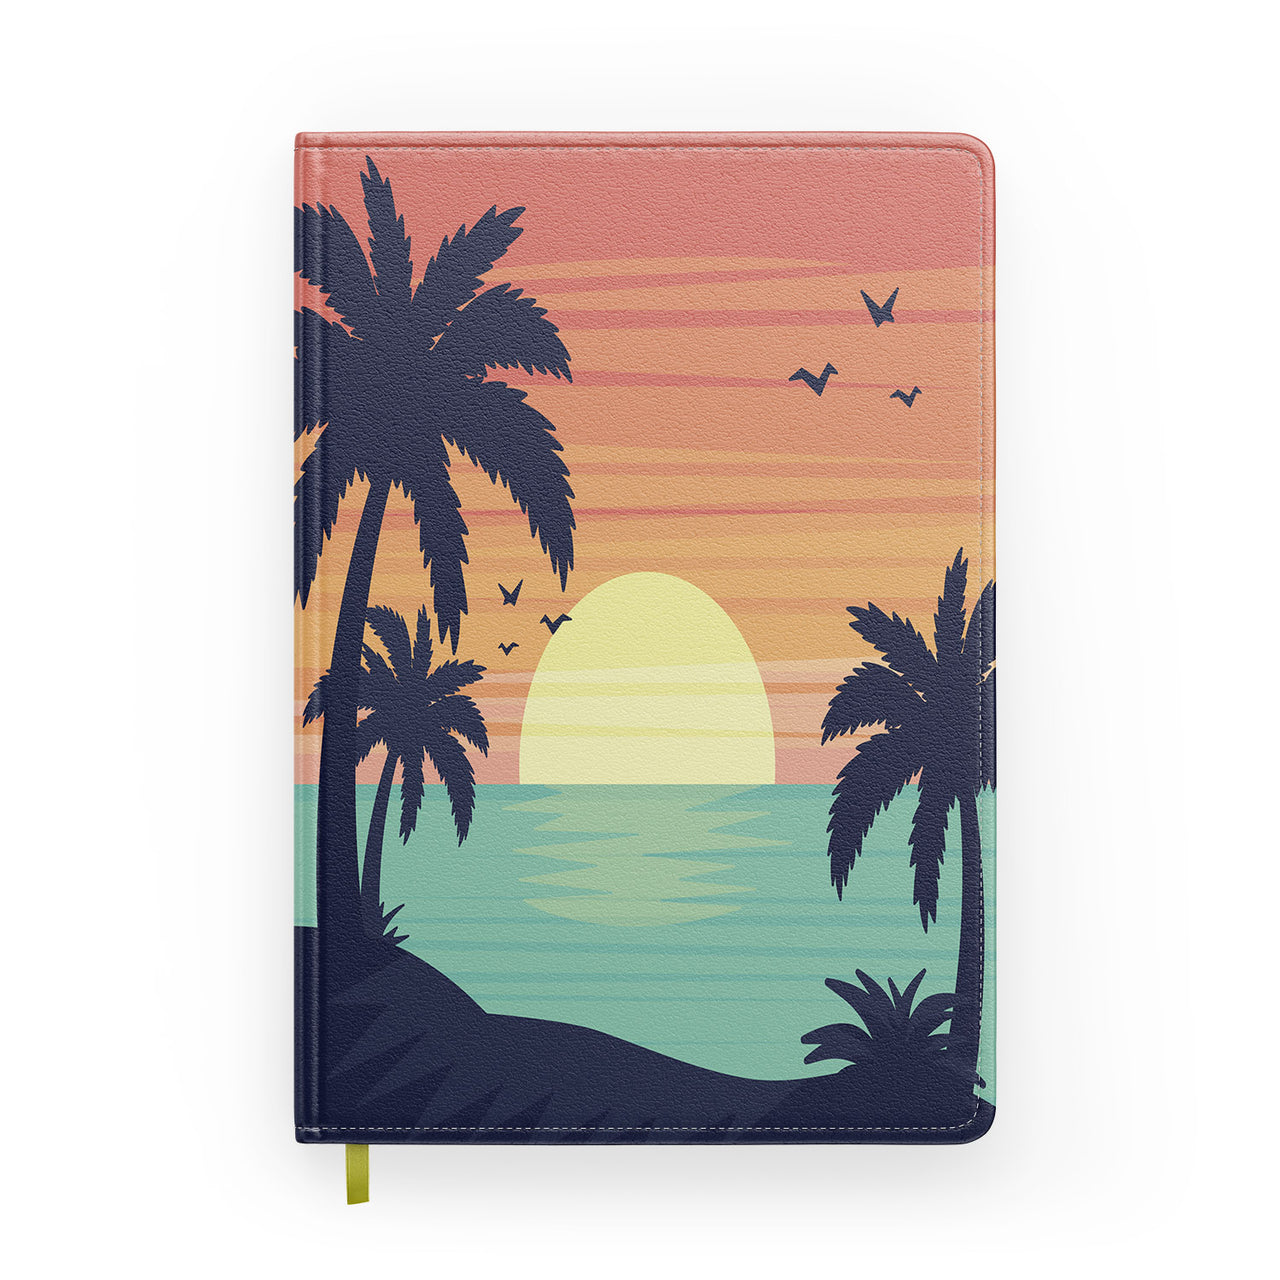 Tropical Summer Theme Designed Notebooks